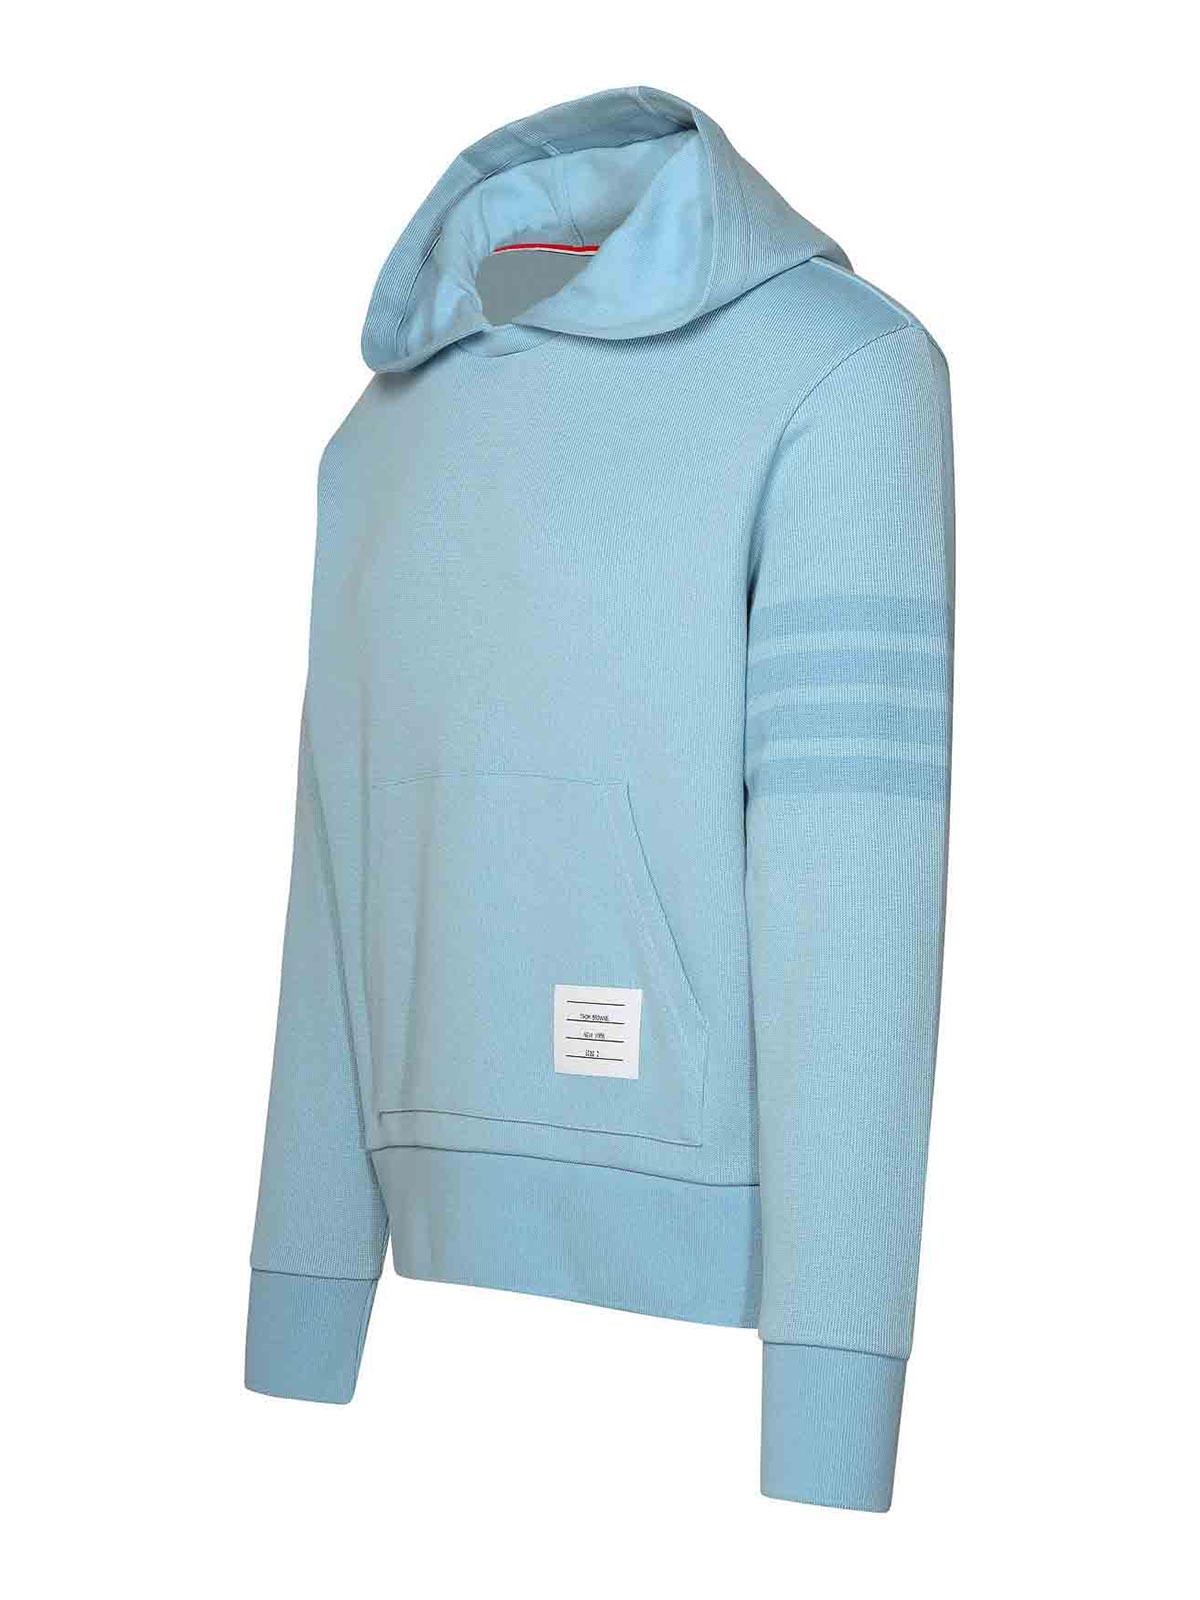 Shop Thom Browne Light Blue Cotton Sweatshirt